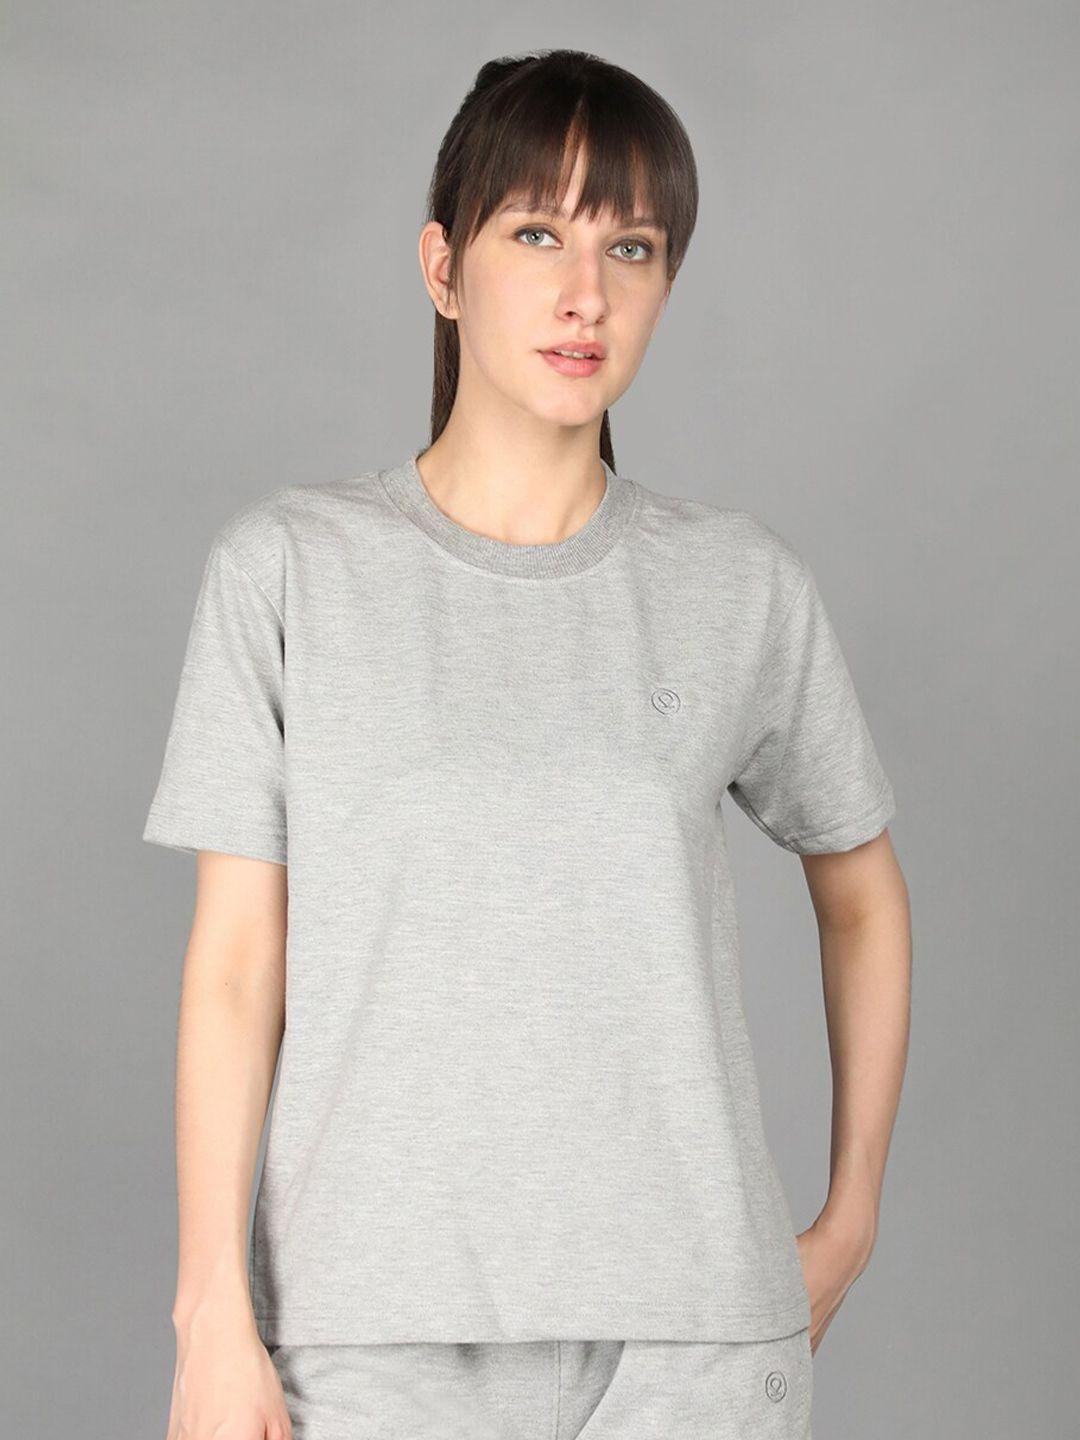 chkokko women cotton loose fit t-shirt